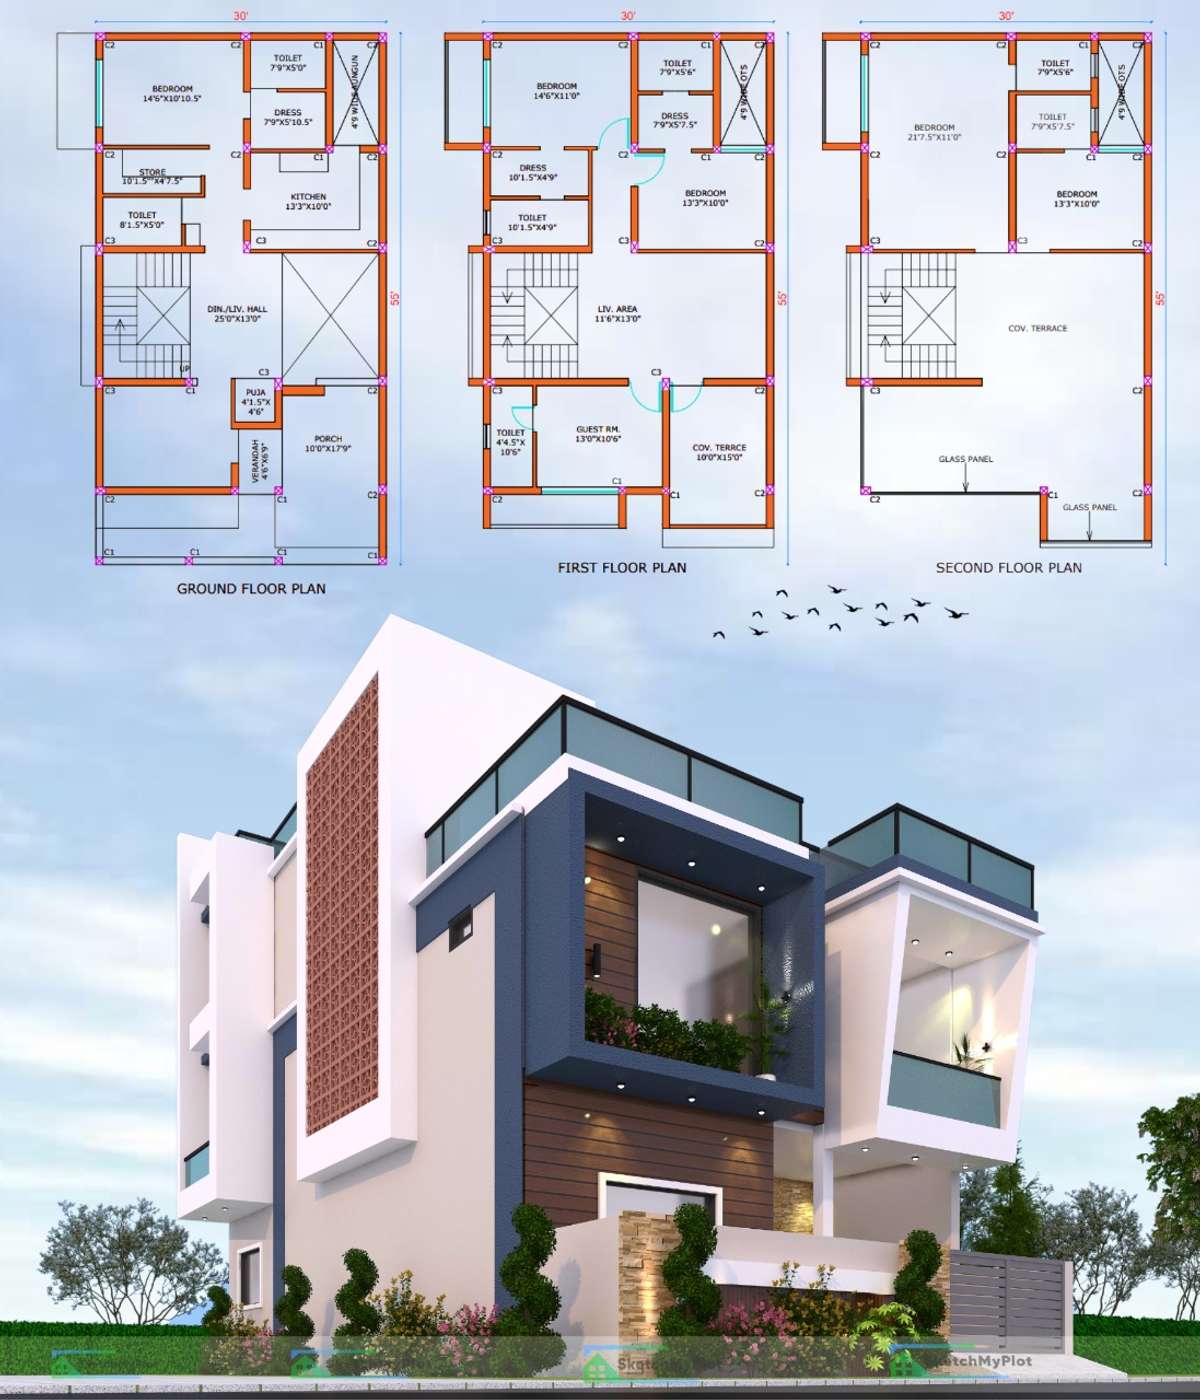 Exterior, Plans Designs by Civil Engineer Manisha Bedse, Indore | Kolo